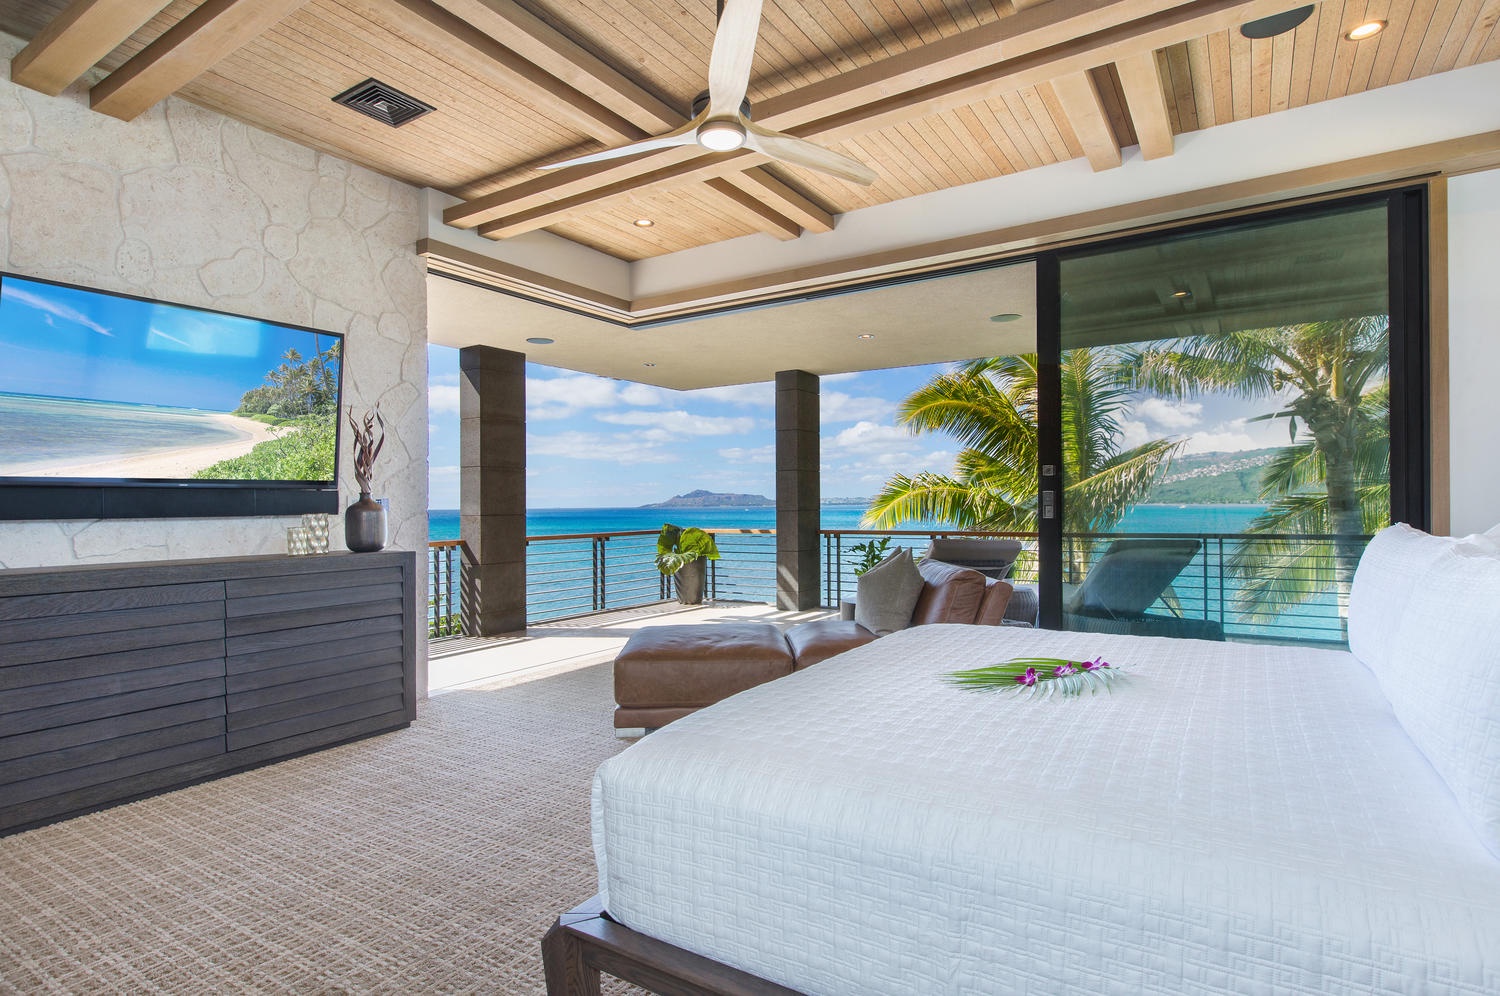 Honolulu Vacation Rentals, Maunalua Bay Estate 4 Bedroom - Primary bedroom views